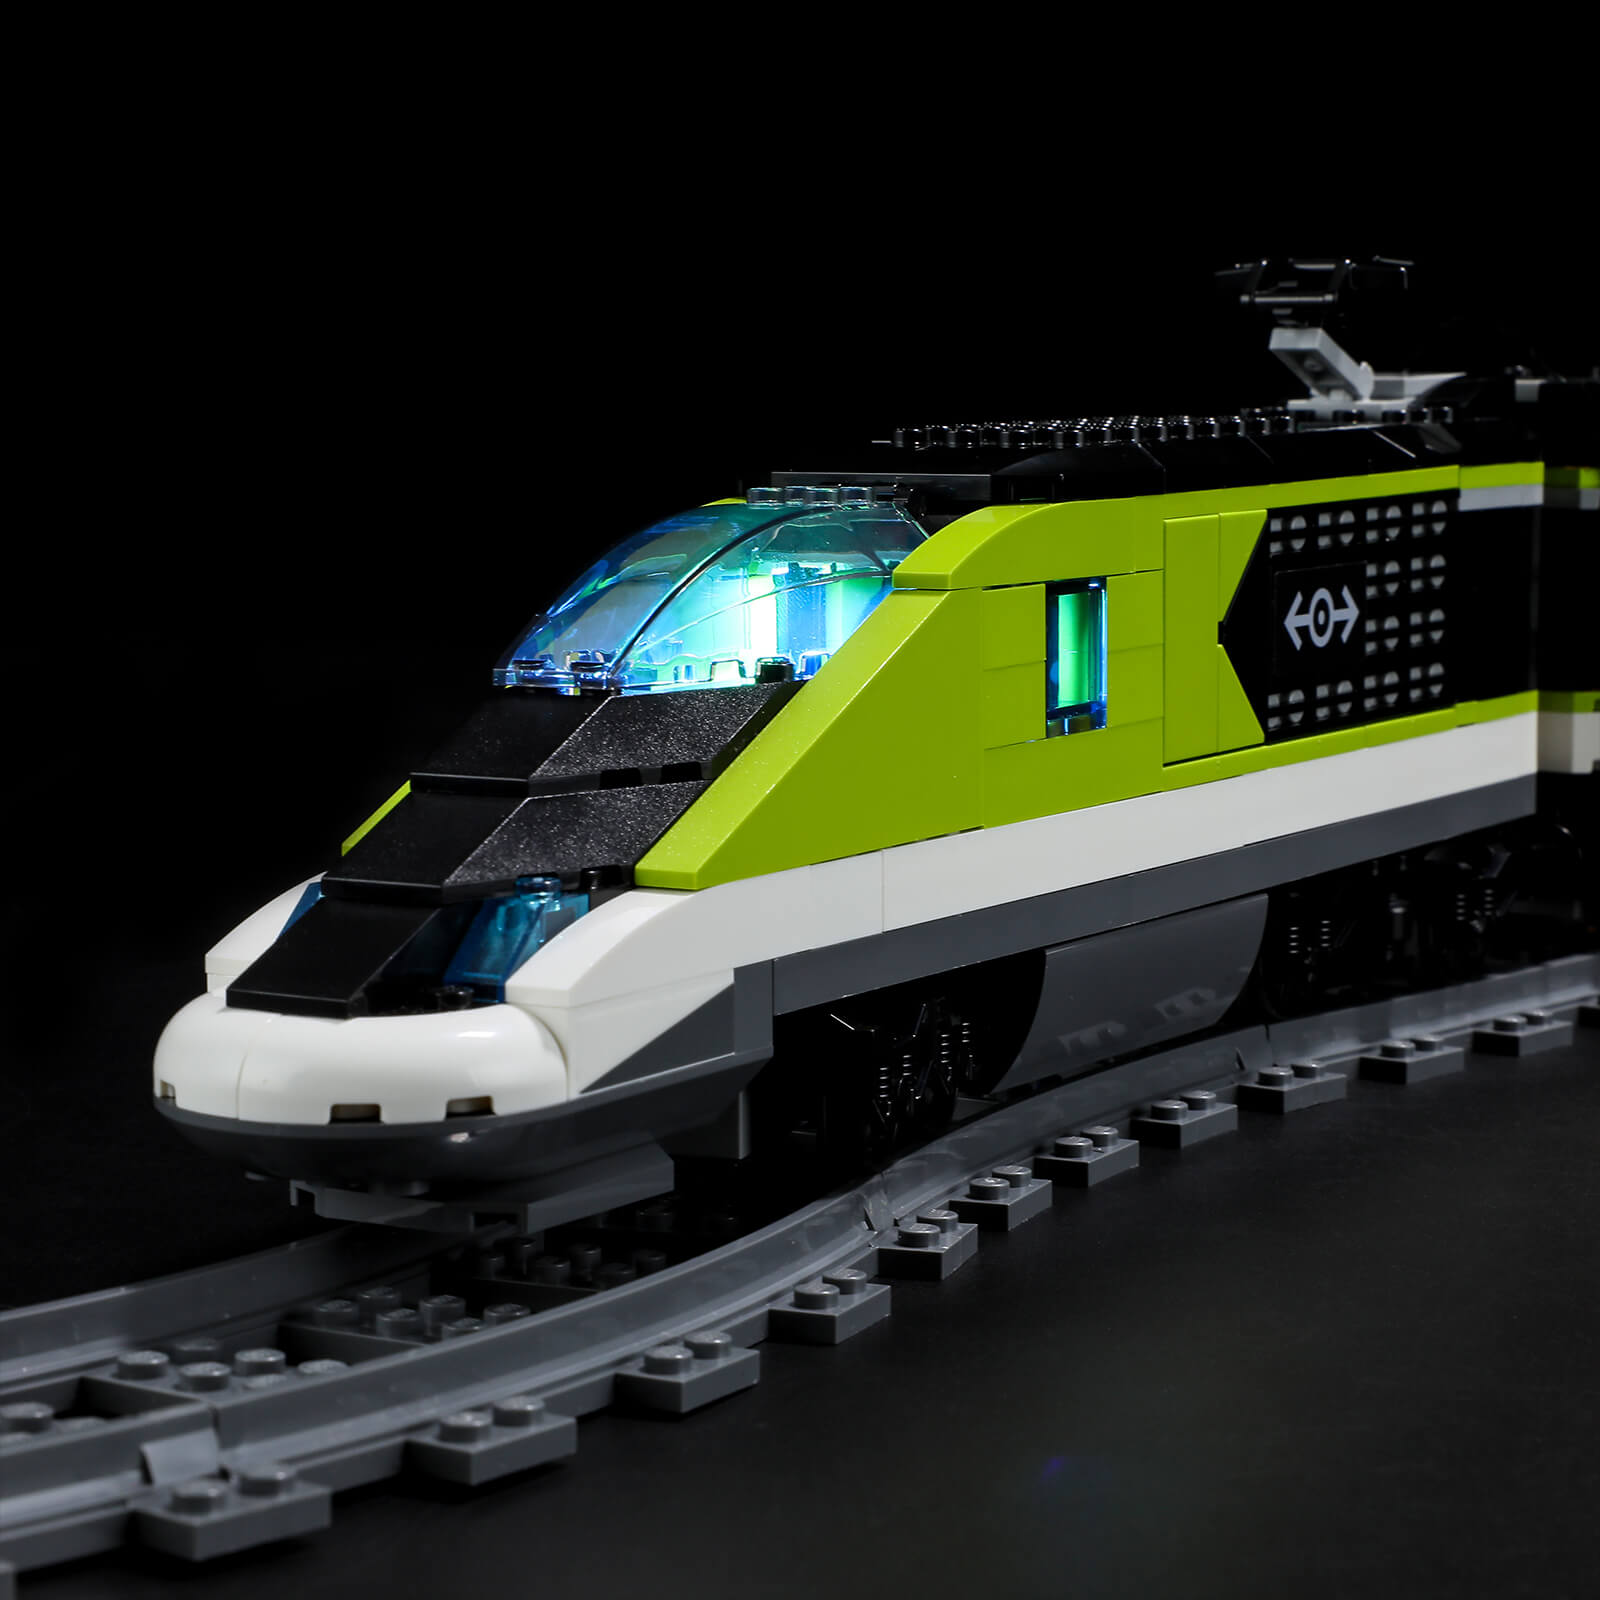 Briksmax Light Kit For Express Passenger Train 60337